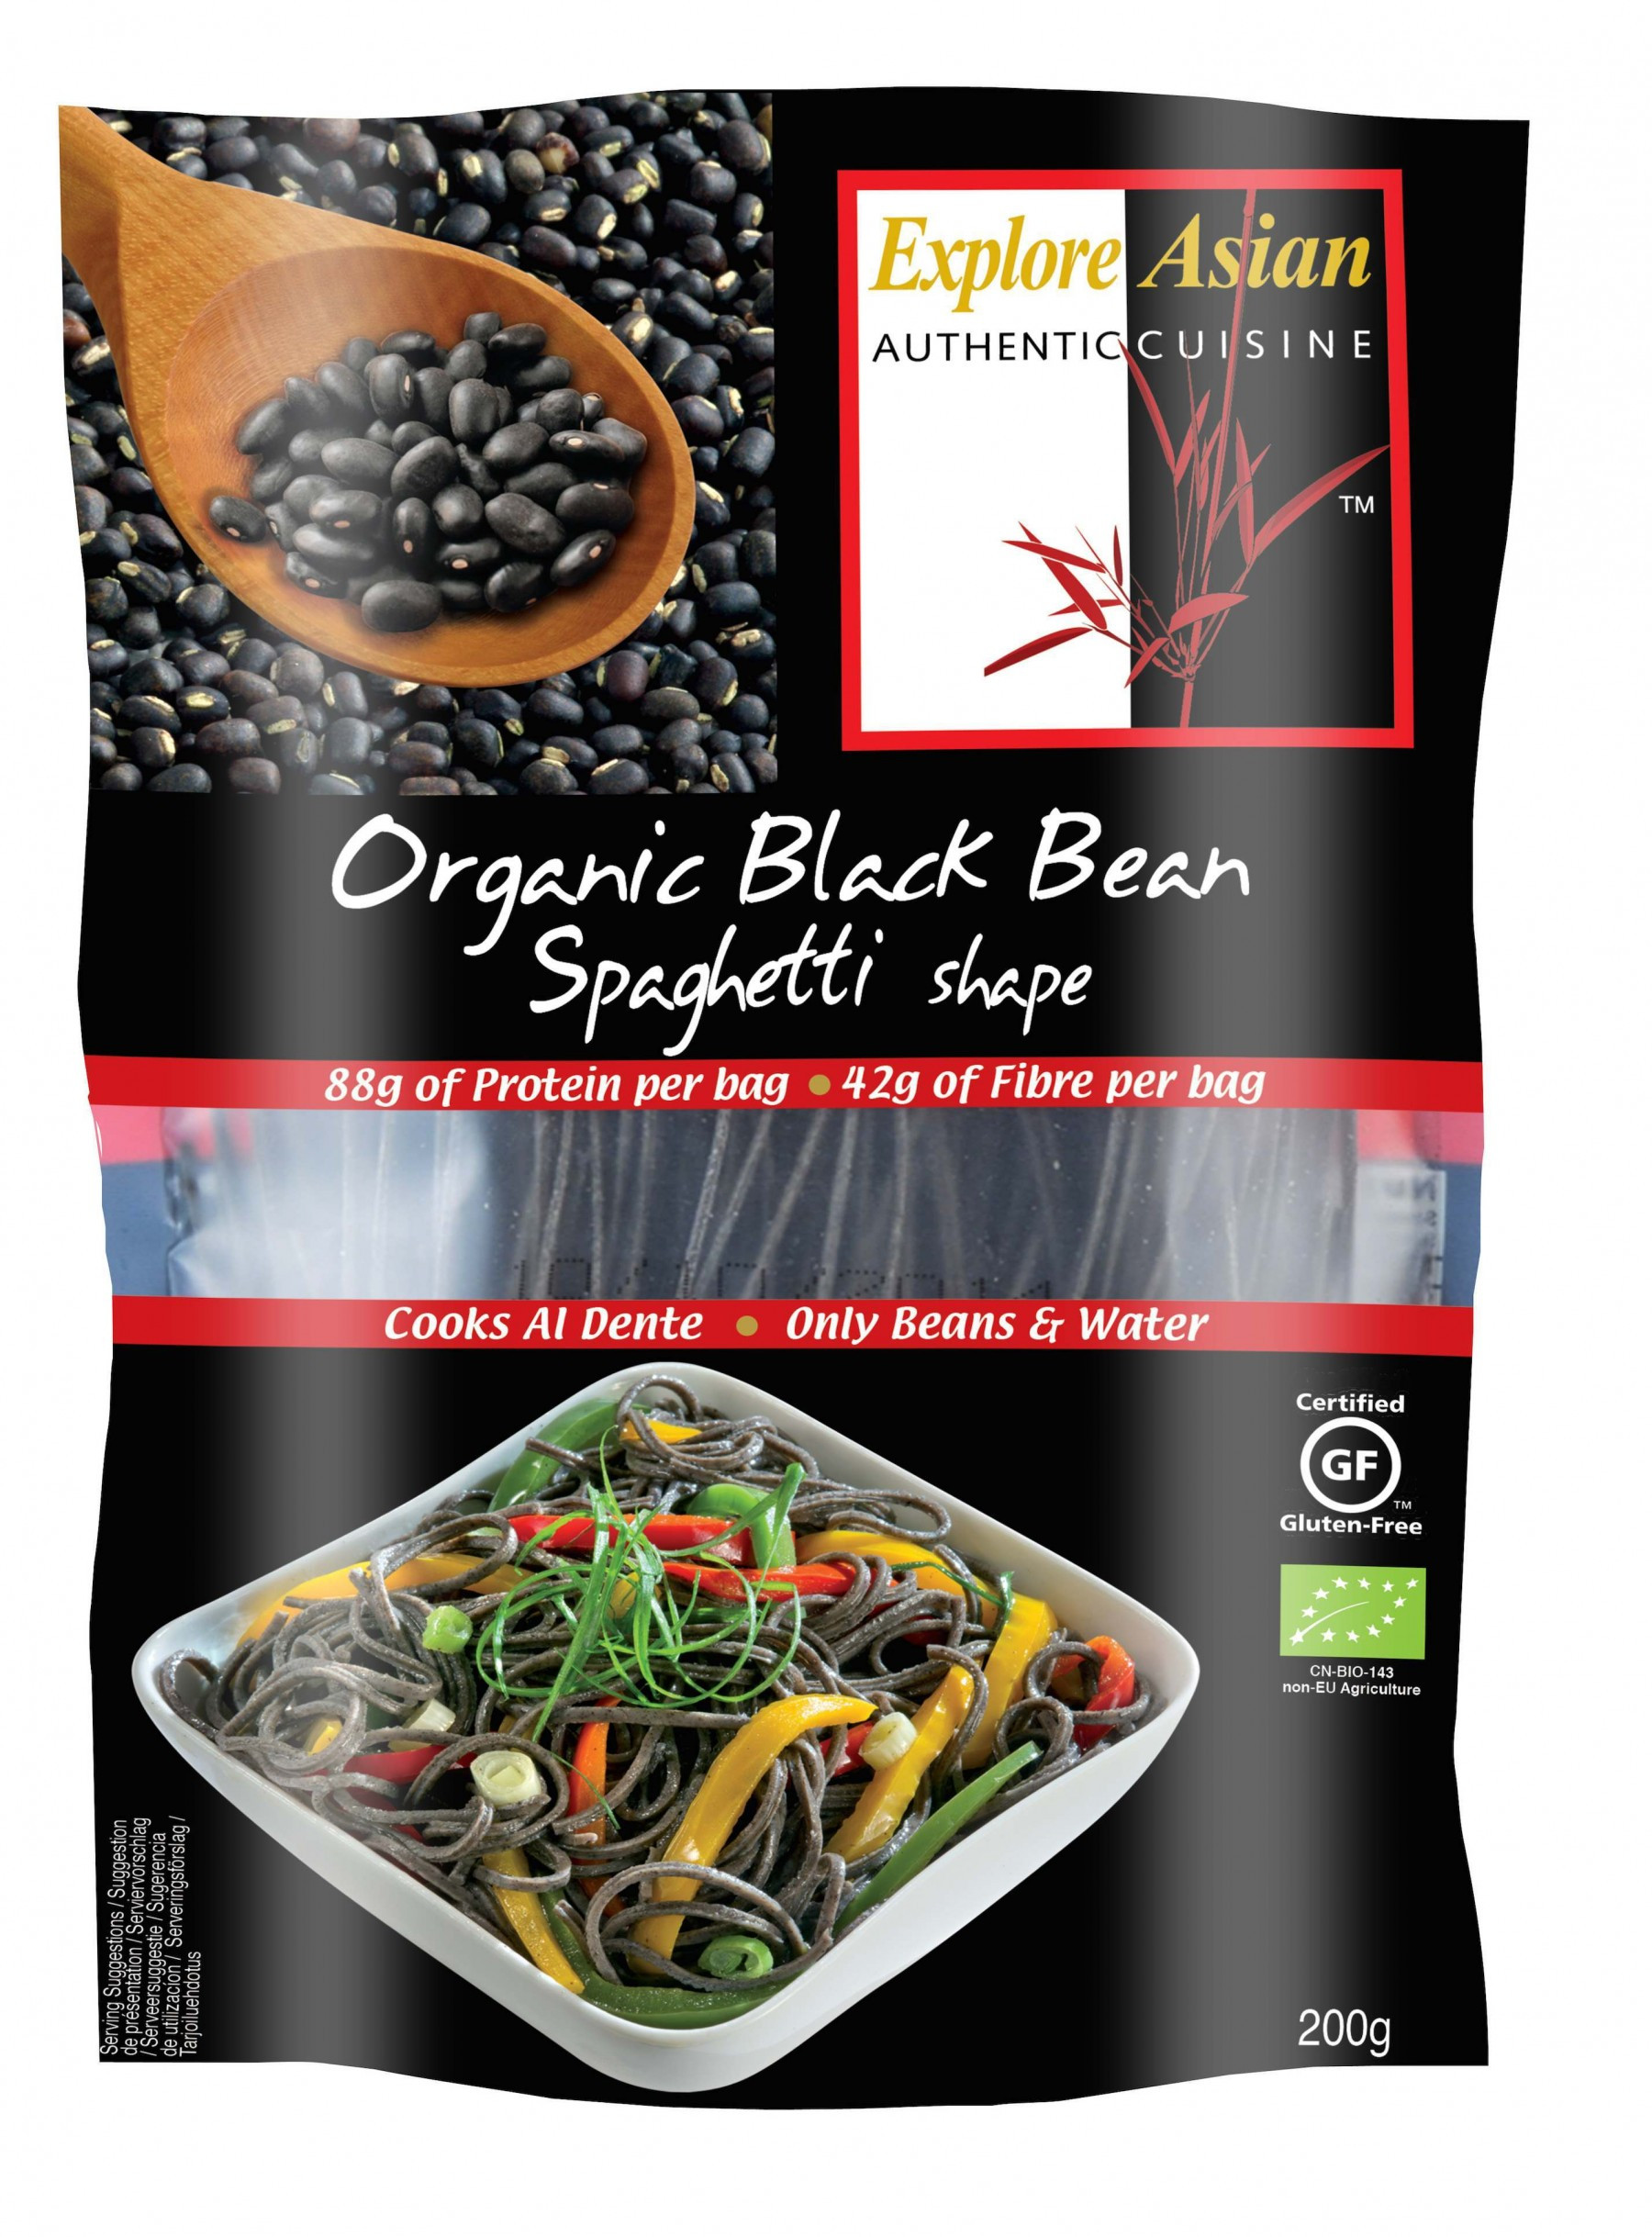 Organic Black Bean Spaghetti
 Explore Asian Organic Black Bean Spaghetti 200g